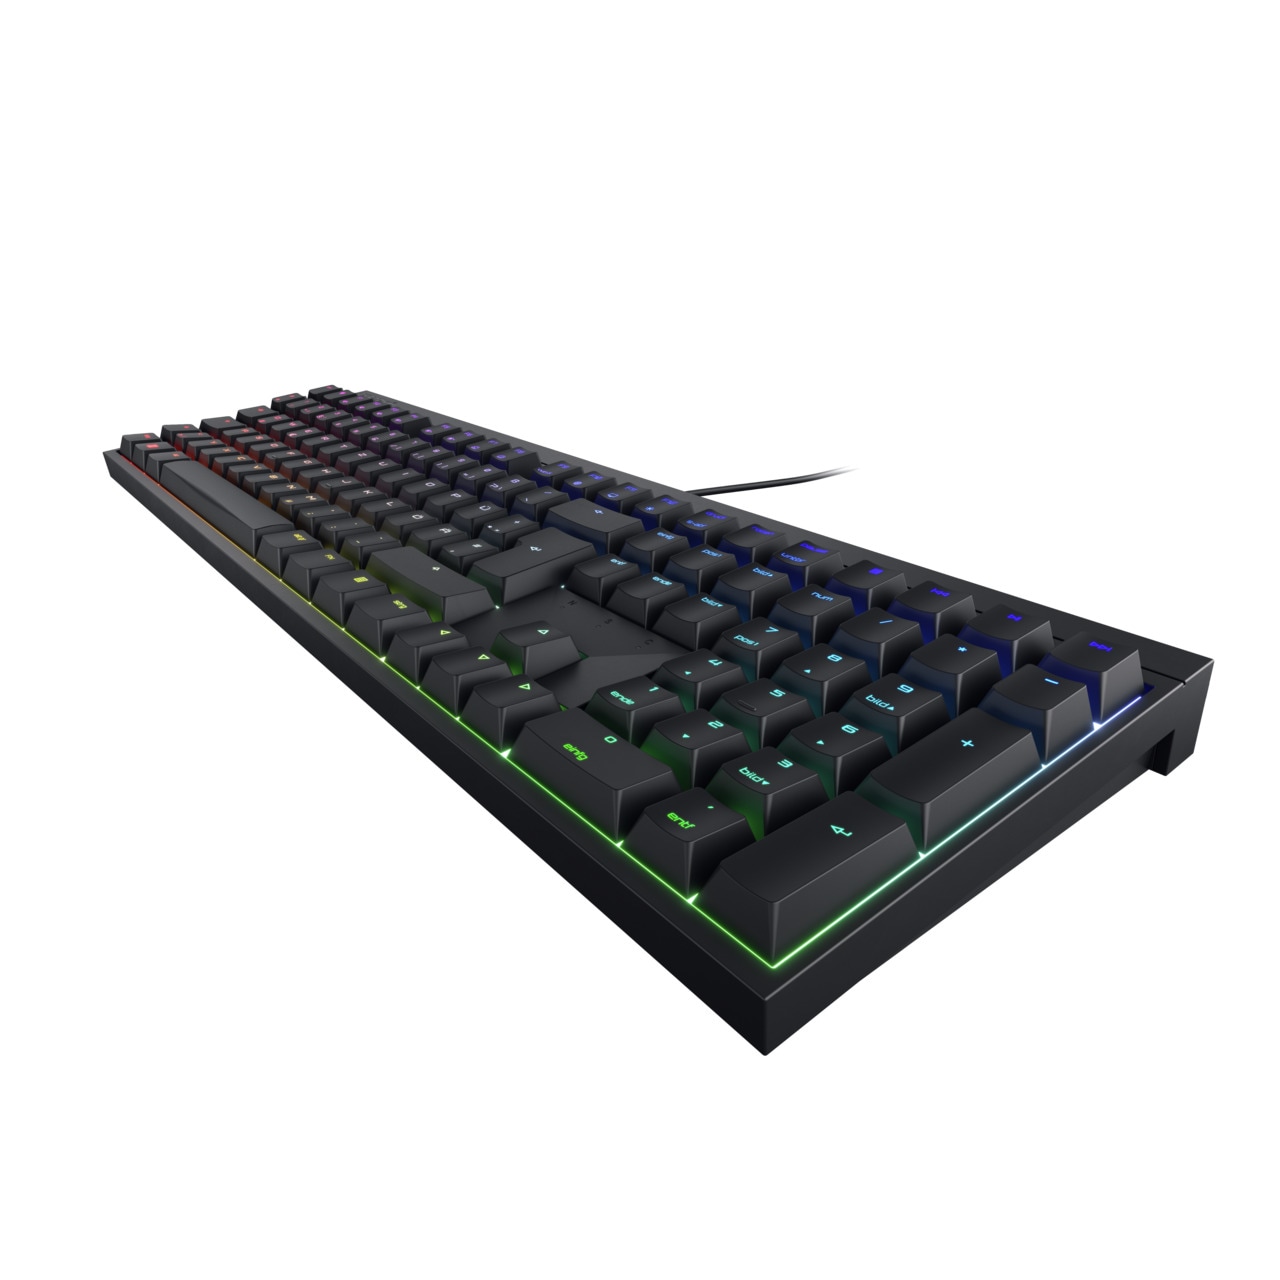 Cherry Gaming-Tastatur »MX 2.0S RGB«, MX Blue jetzt im OTTO Online Shop